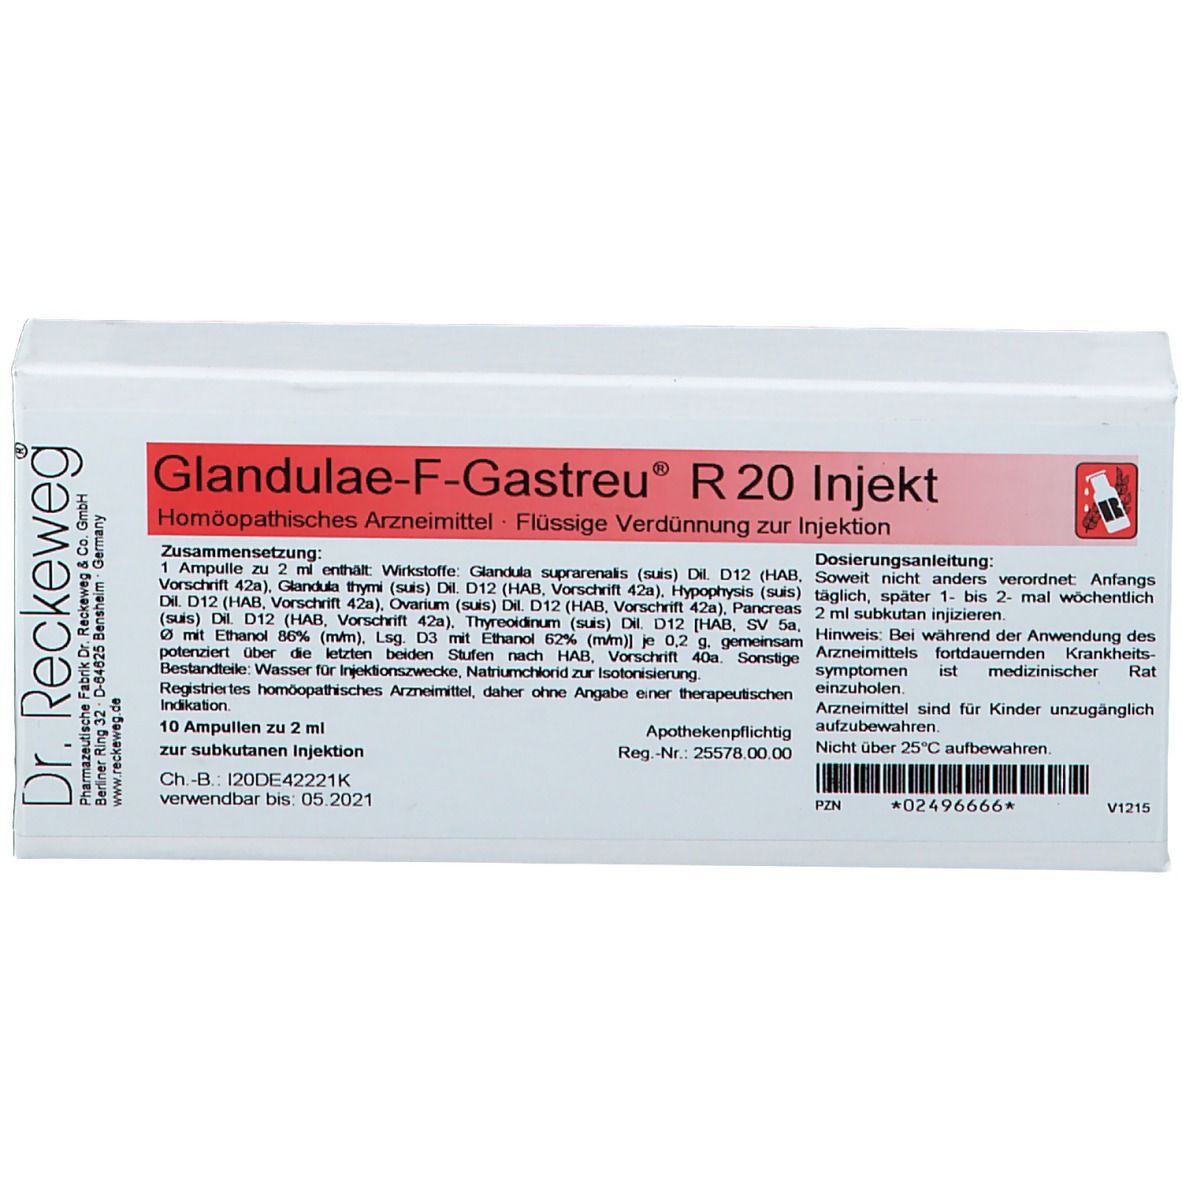 Glandulae-F-Gastreu® R20 Injekt Ampullen